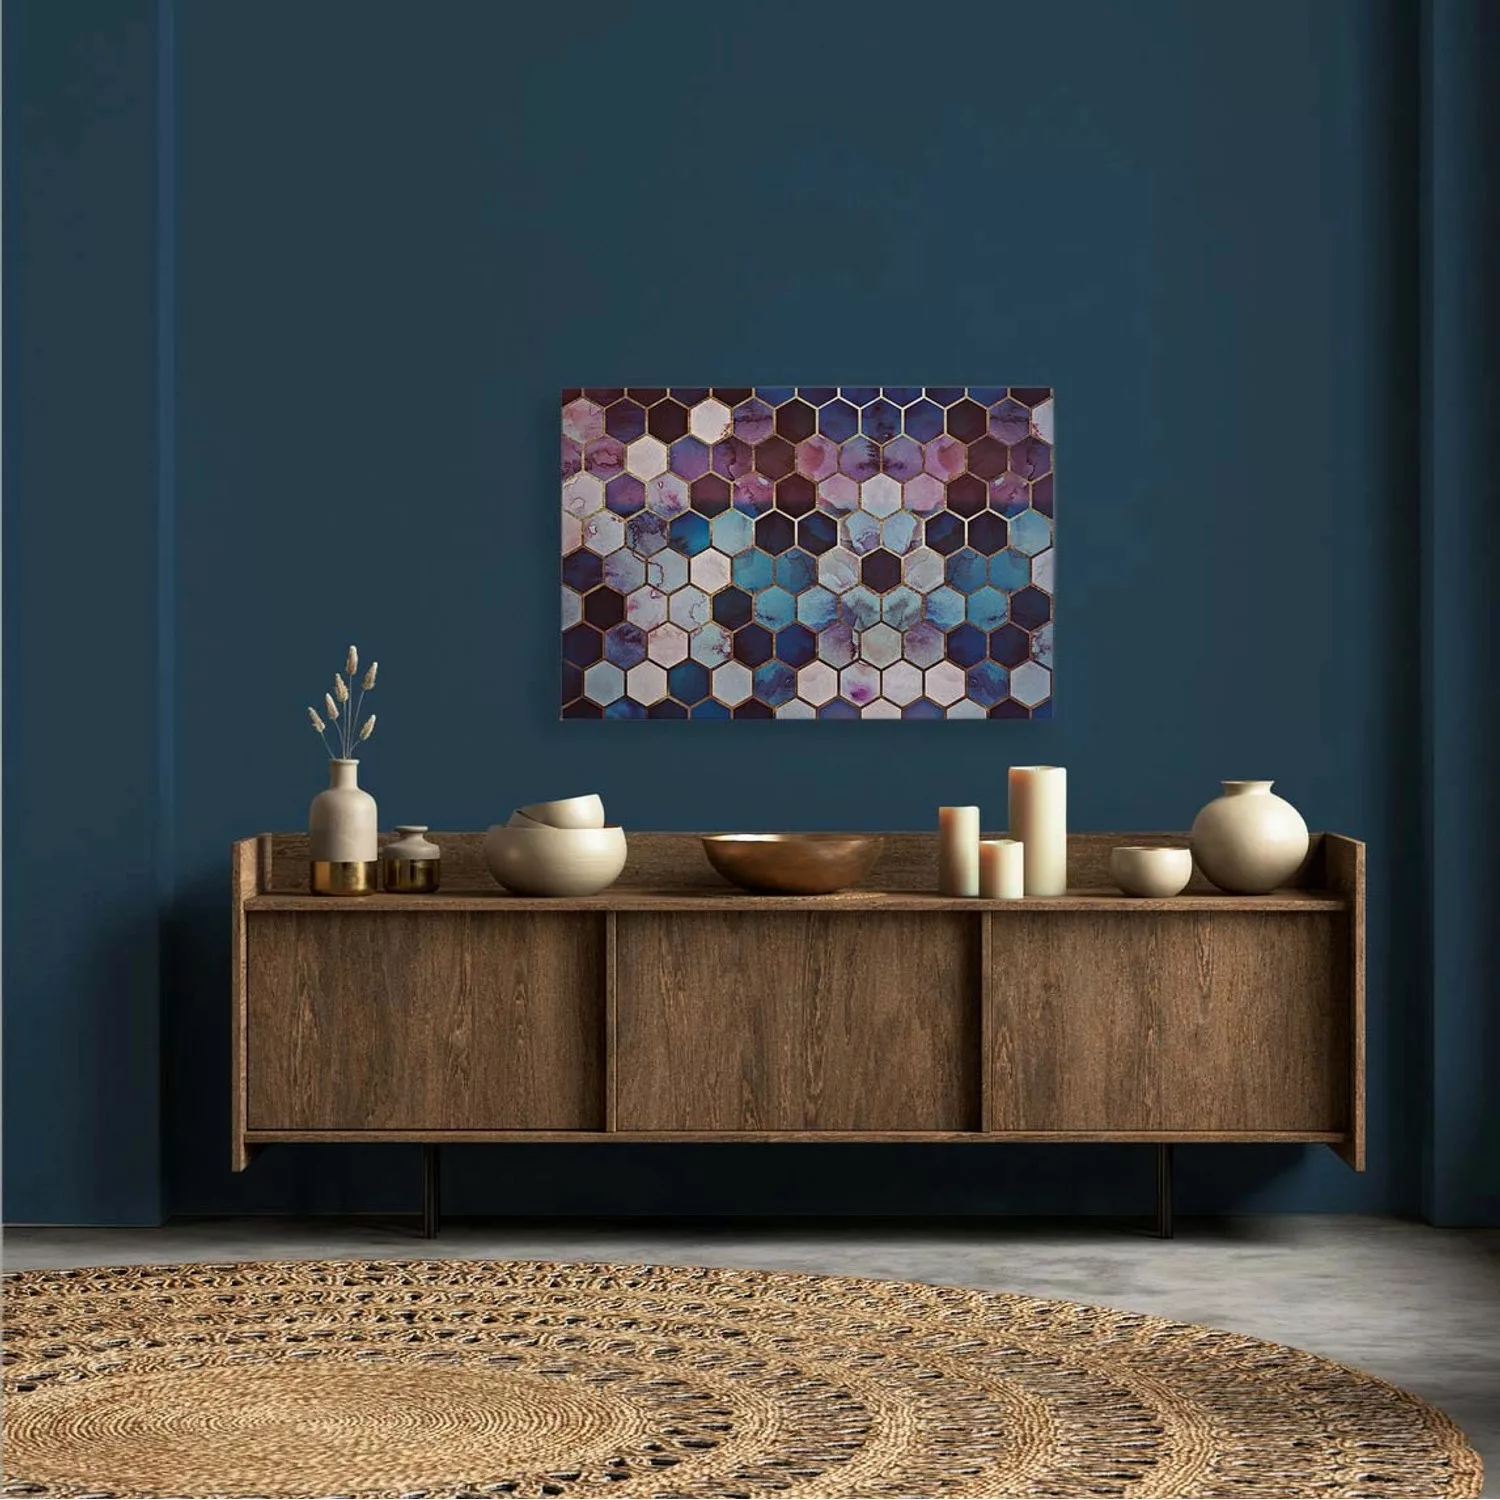 Bricoflor Wandbilder Mit Hexagon Muster Deko Leinwandbild In Aquarell Optik günstig online kaufen